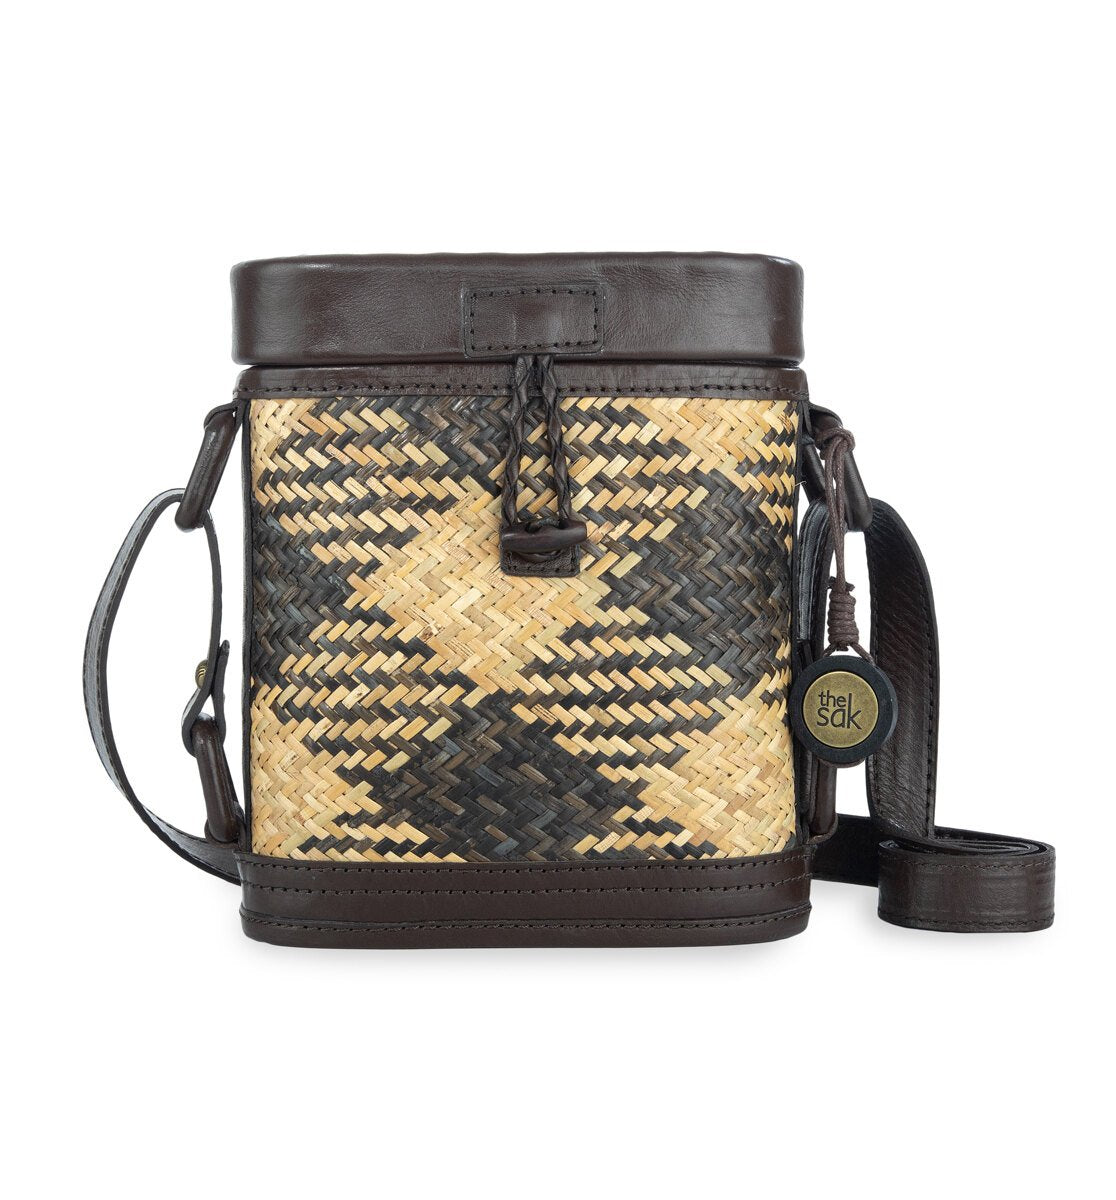 Best Leather Handbag Brands for Traveling - Schimiggy Reviews